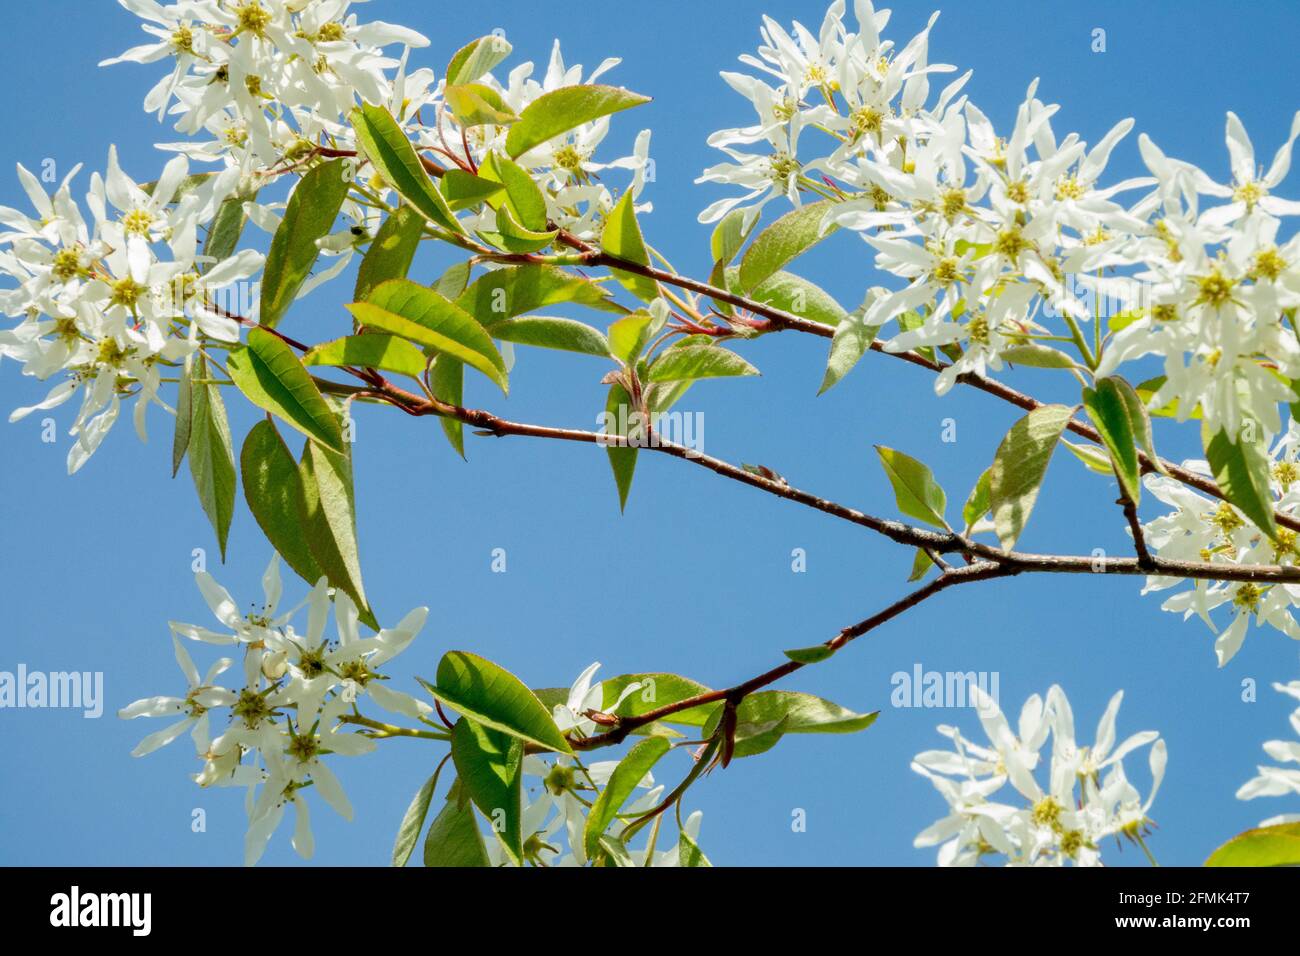 Amelanchier lamarckii Snowy mespilus Juneberry Blooming, Shrub Stock Photo